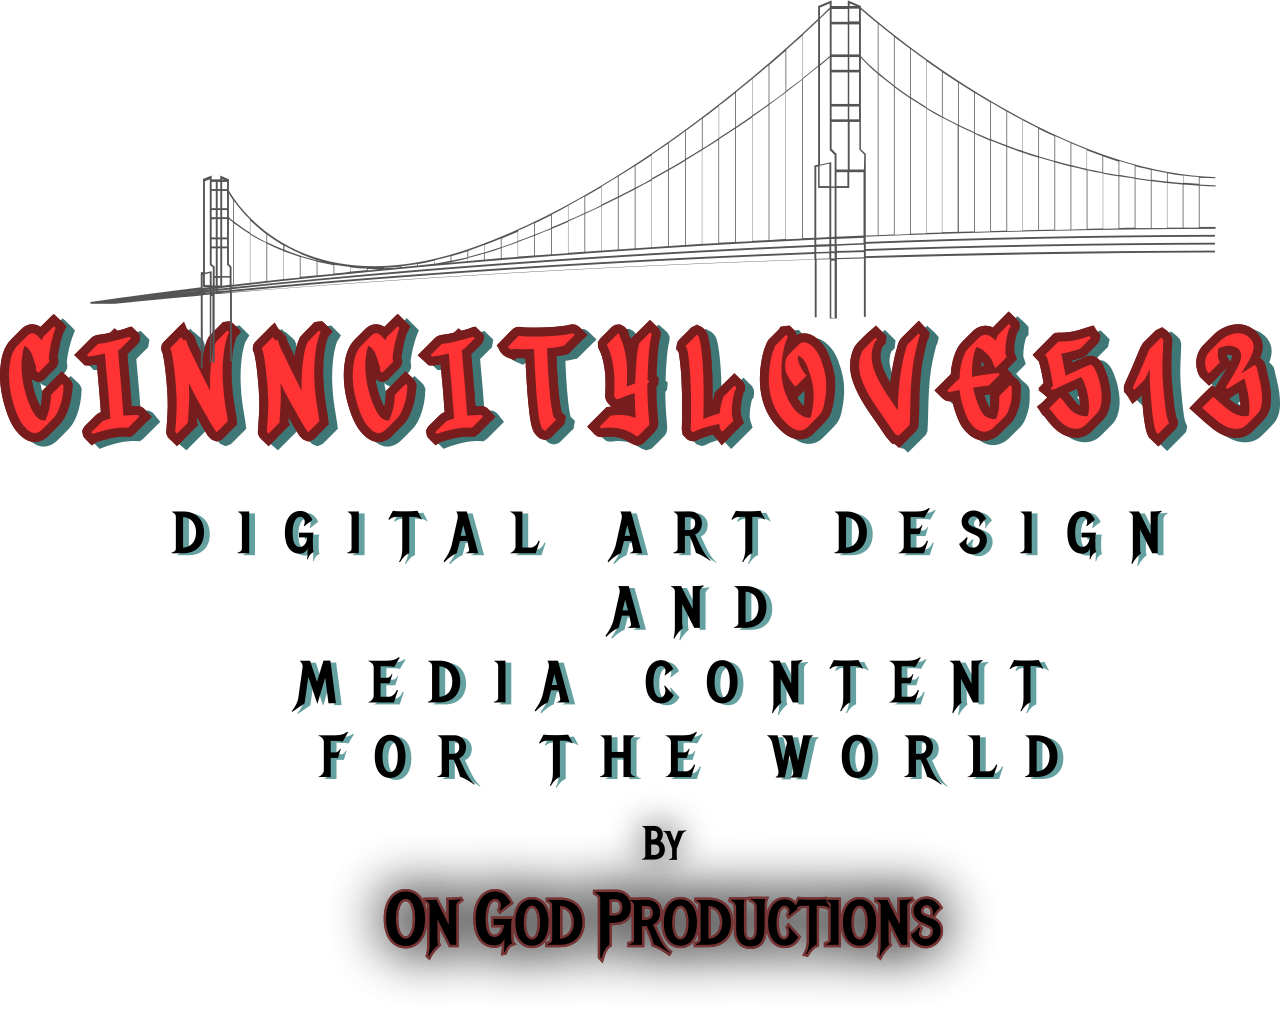 CinnCityLove513's logo